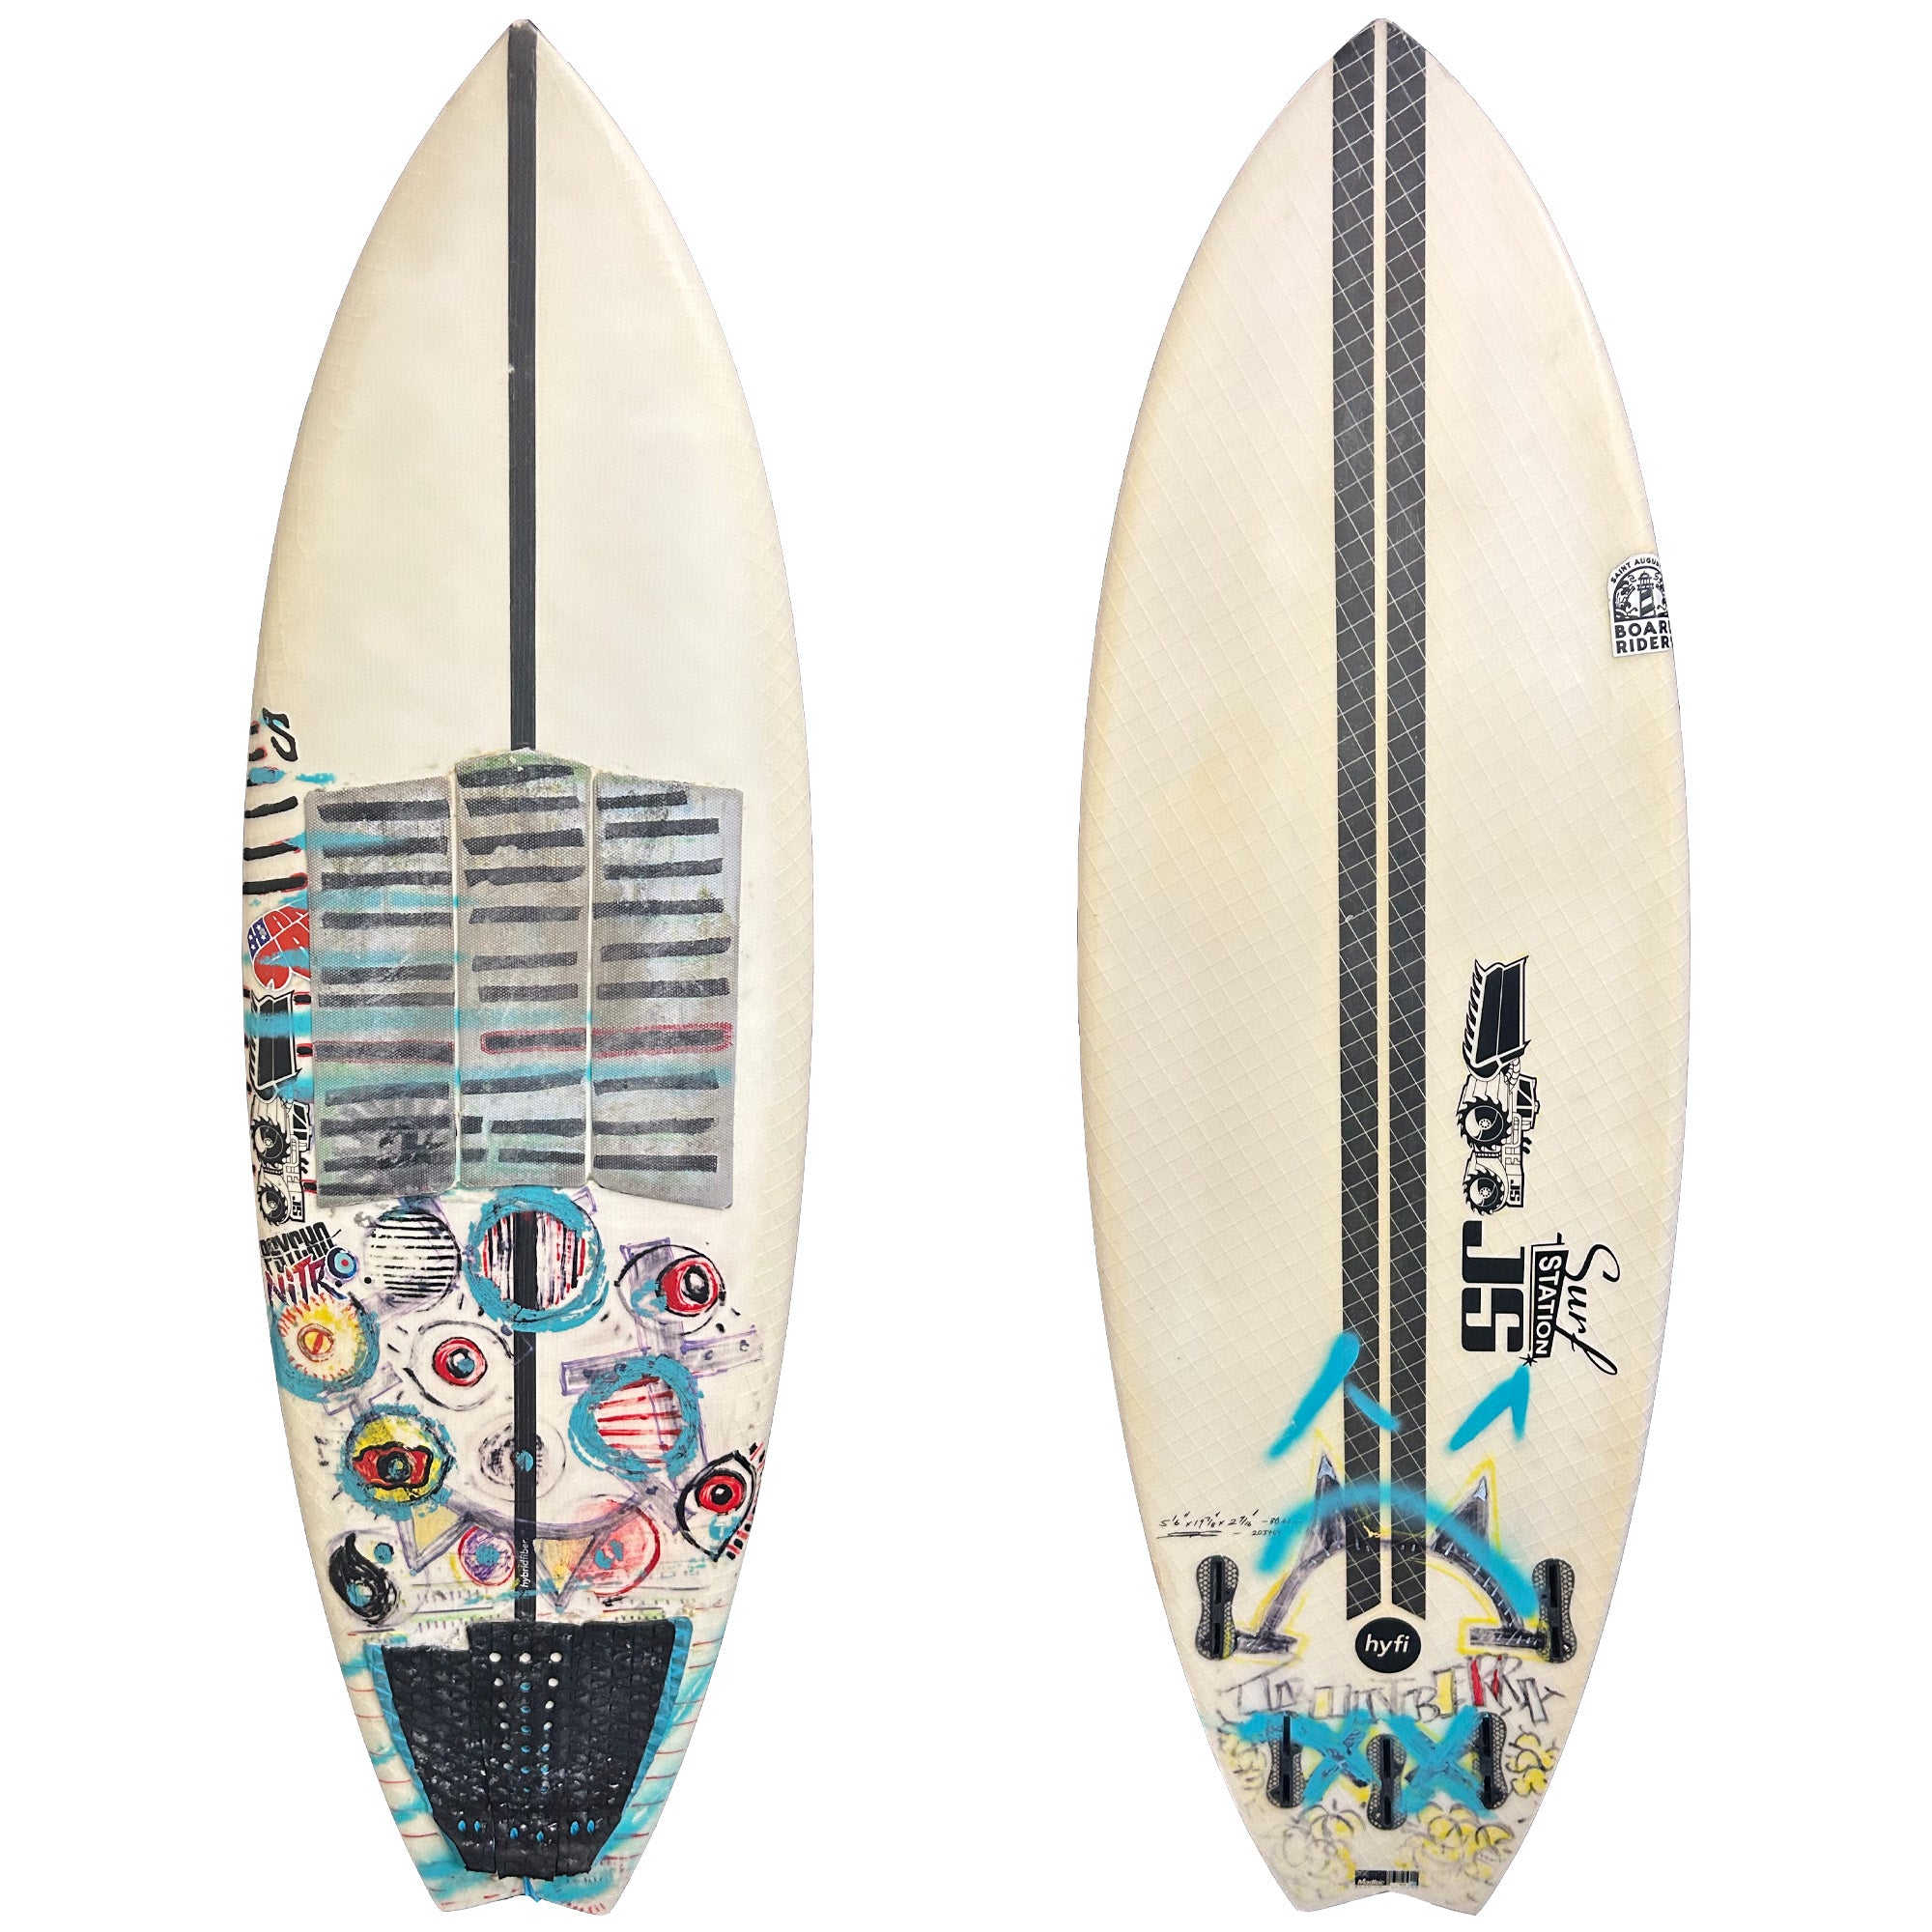 JS Psycho Nitro 5'6 Used Surfboard